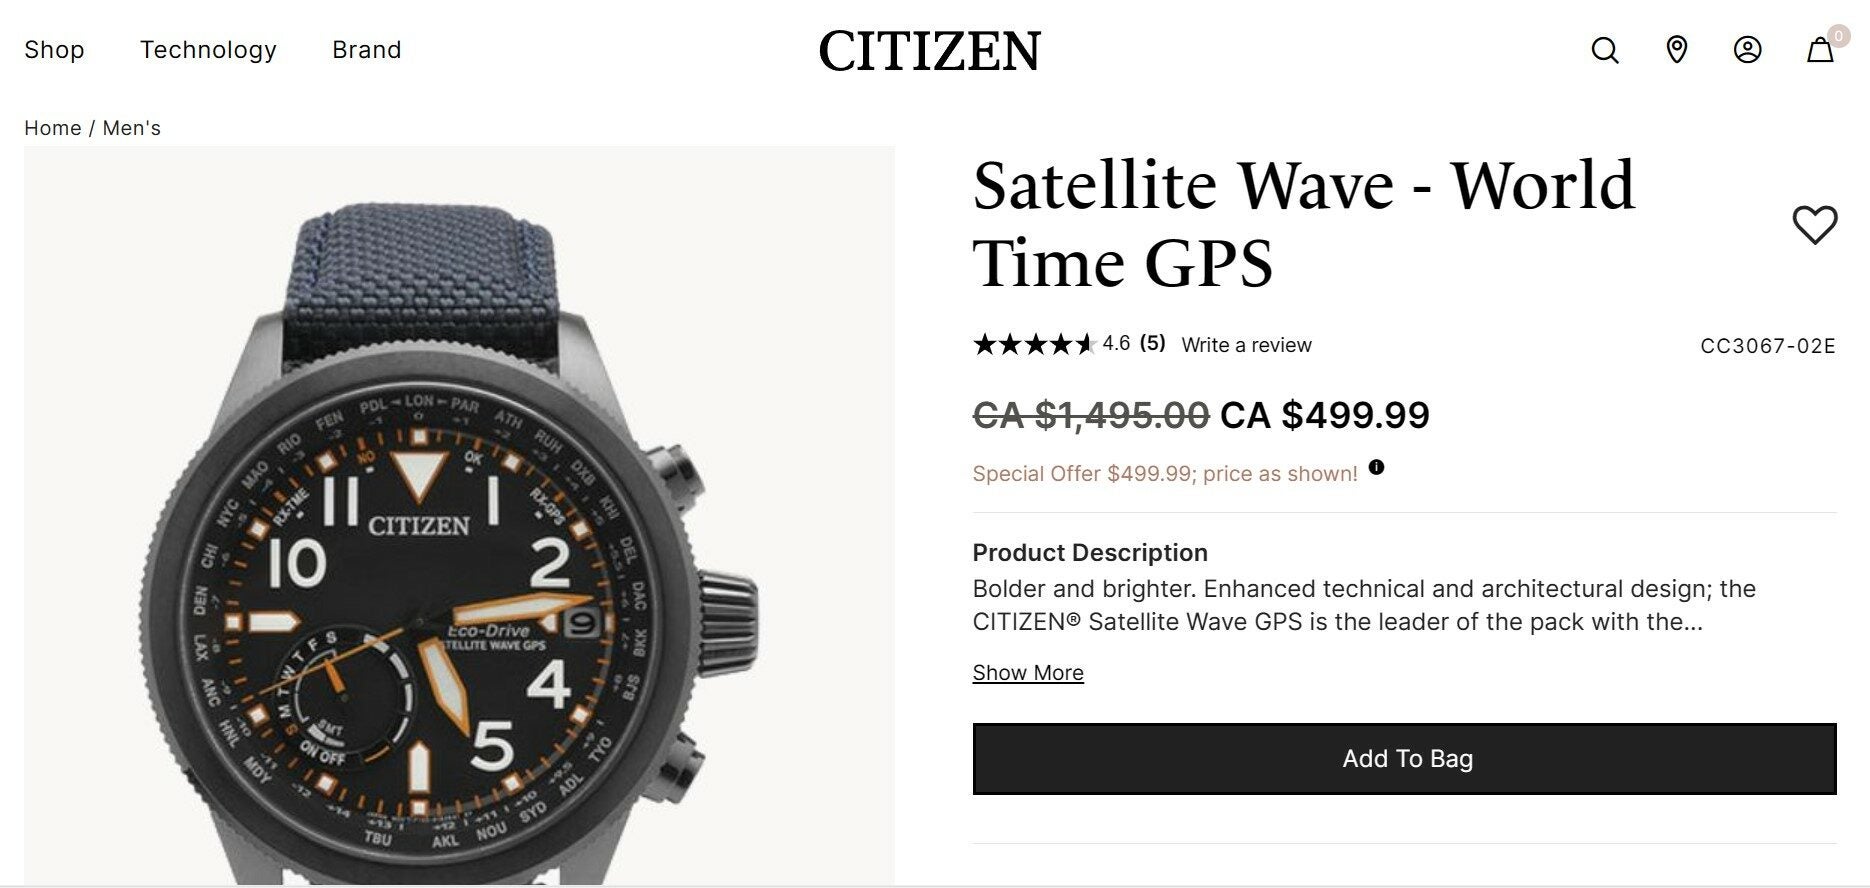 Citizen] Citizen Satellite Wave - World Time GPS watch (CC3067-02E